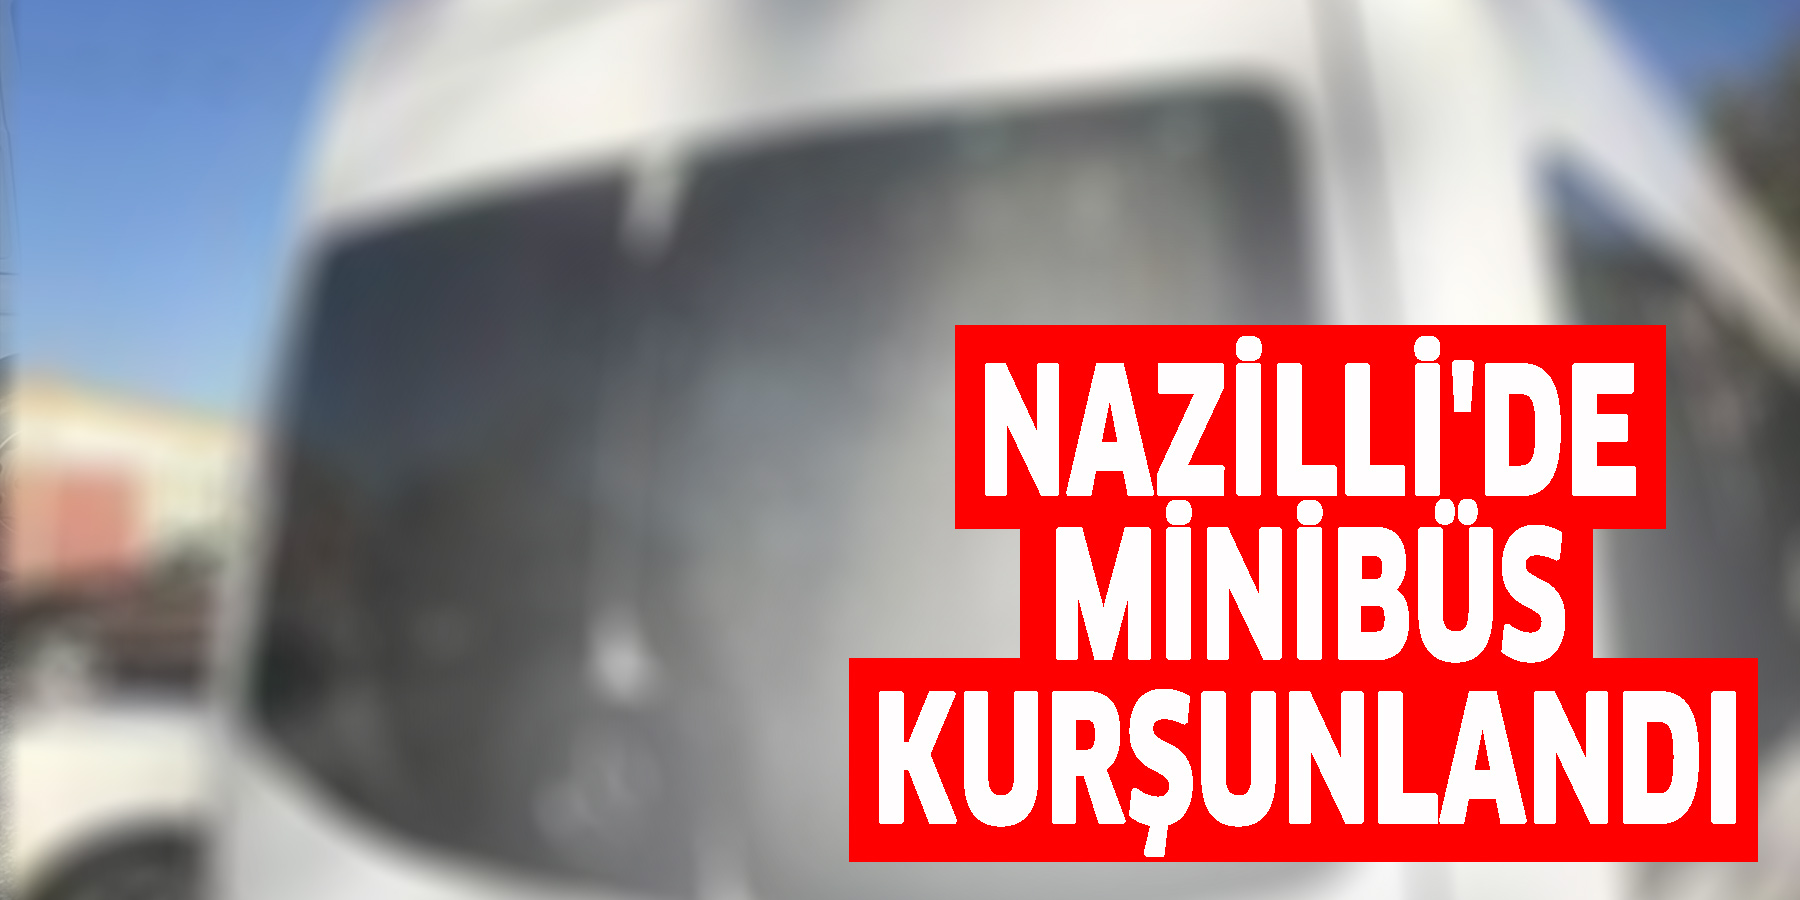 Nazilli'de minibüs kurşunlandı